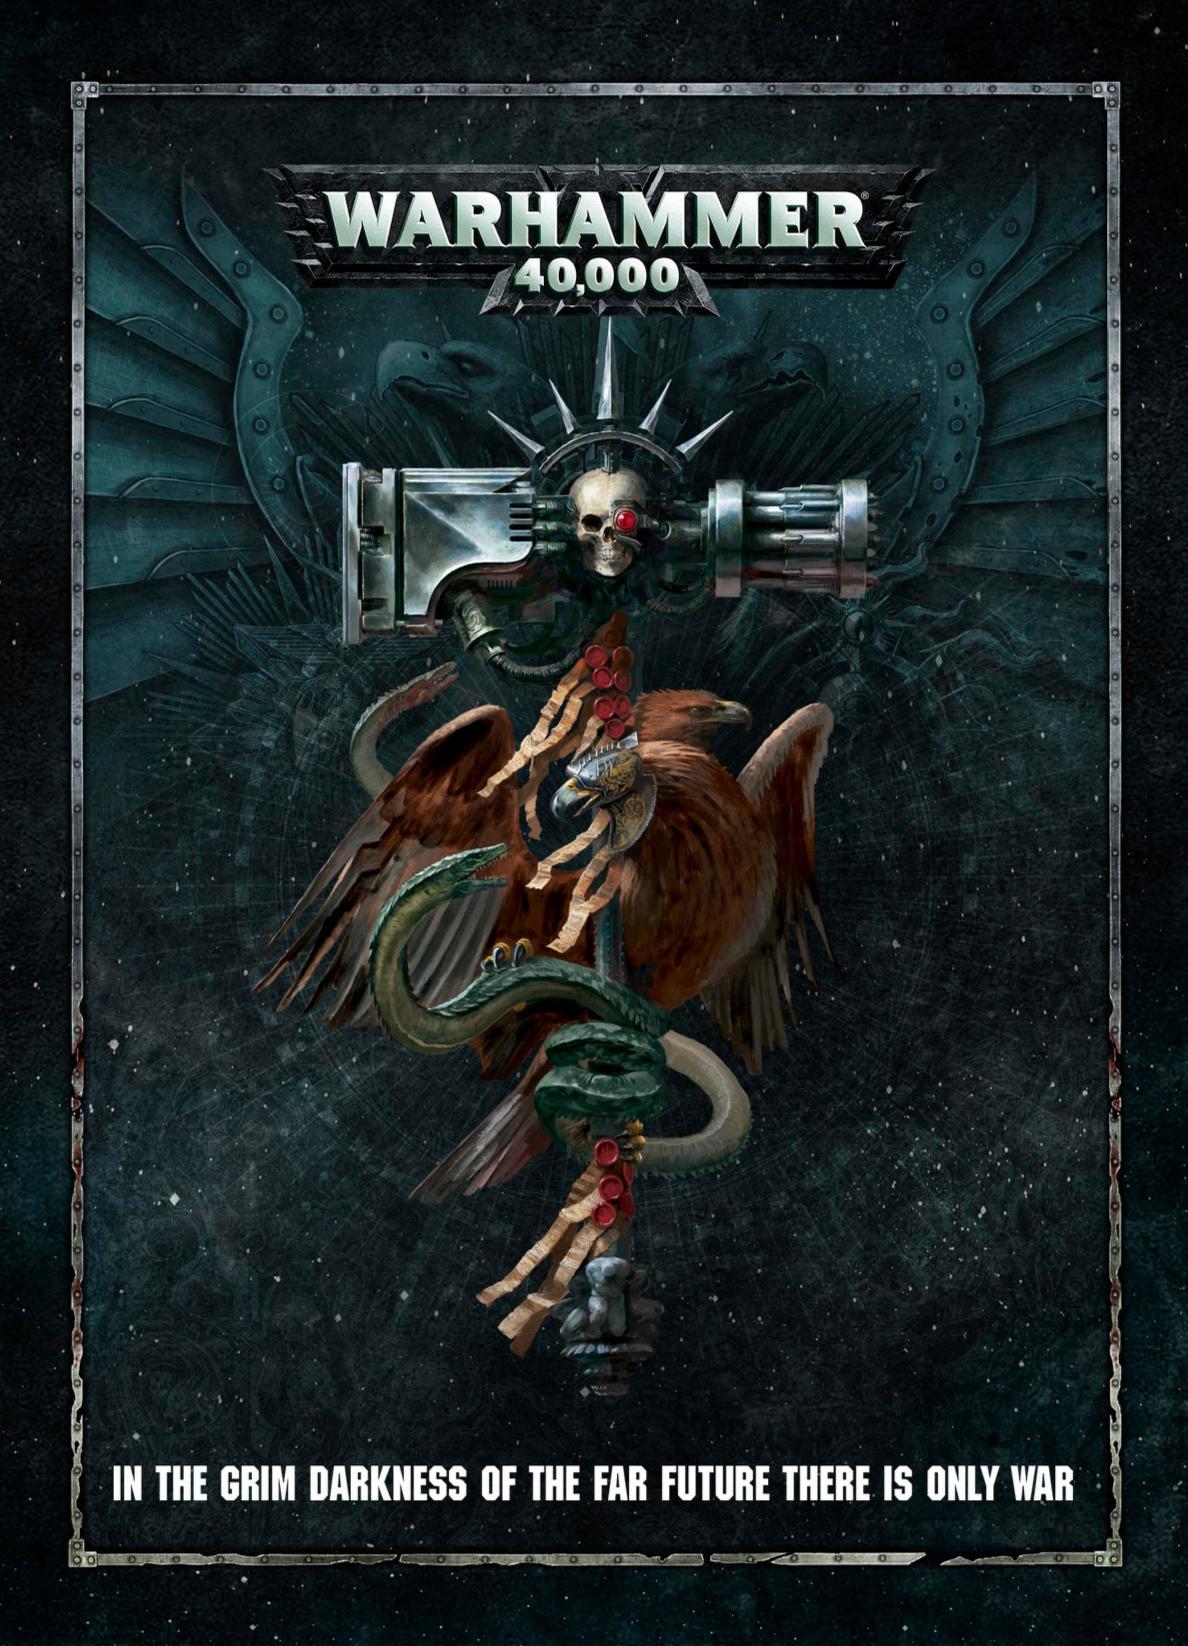 Can I find Warhammer 40k books in digital download format?